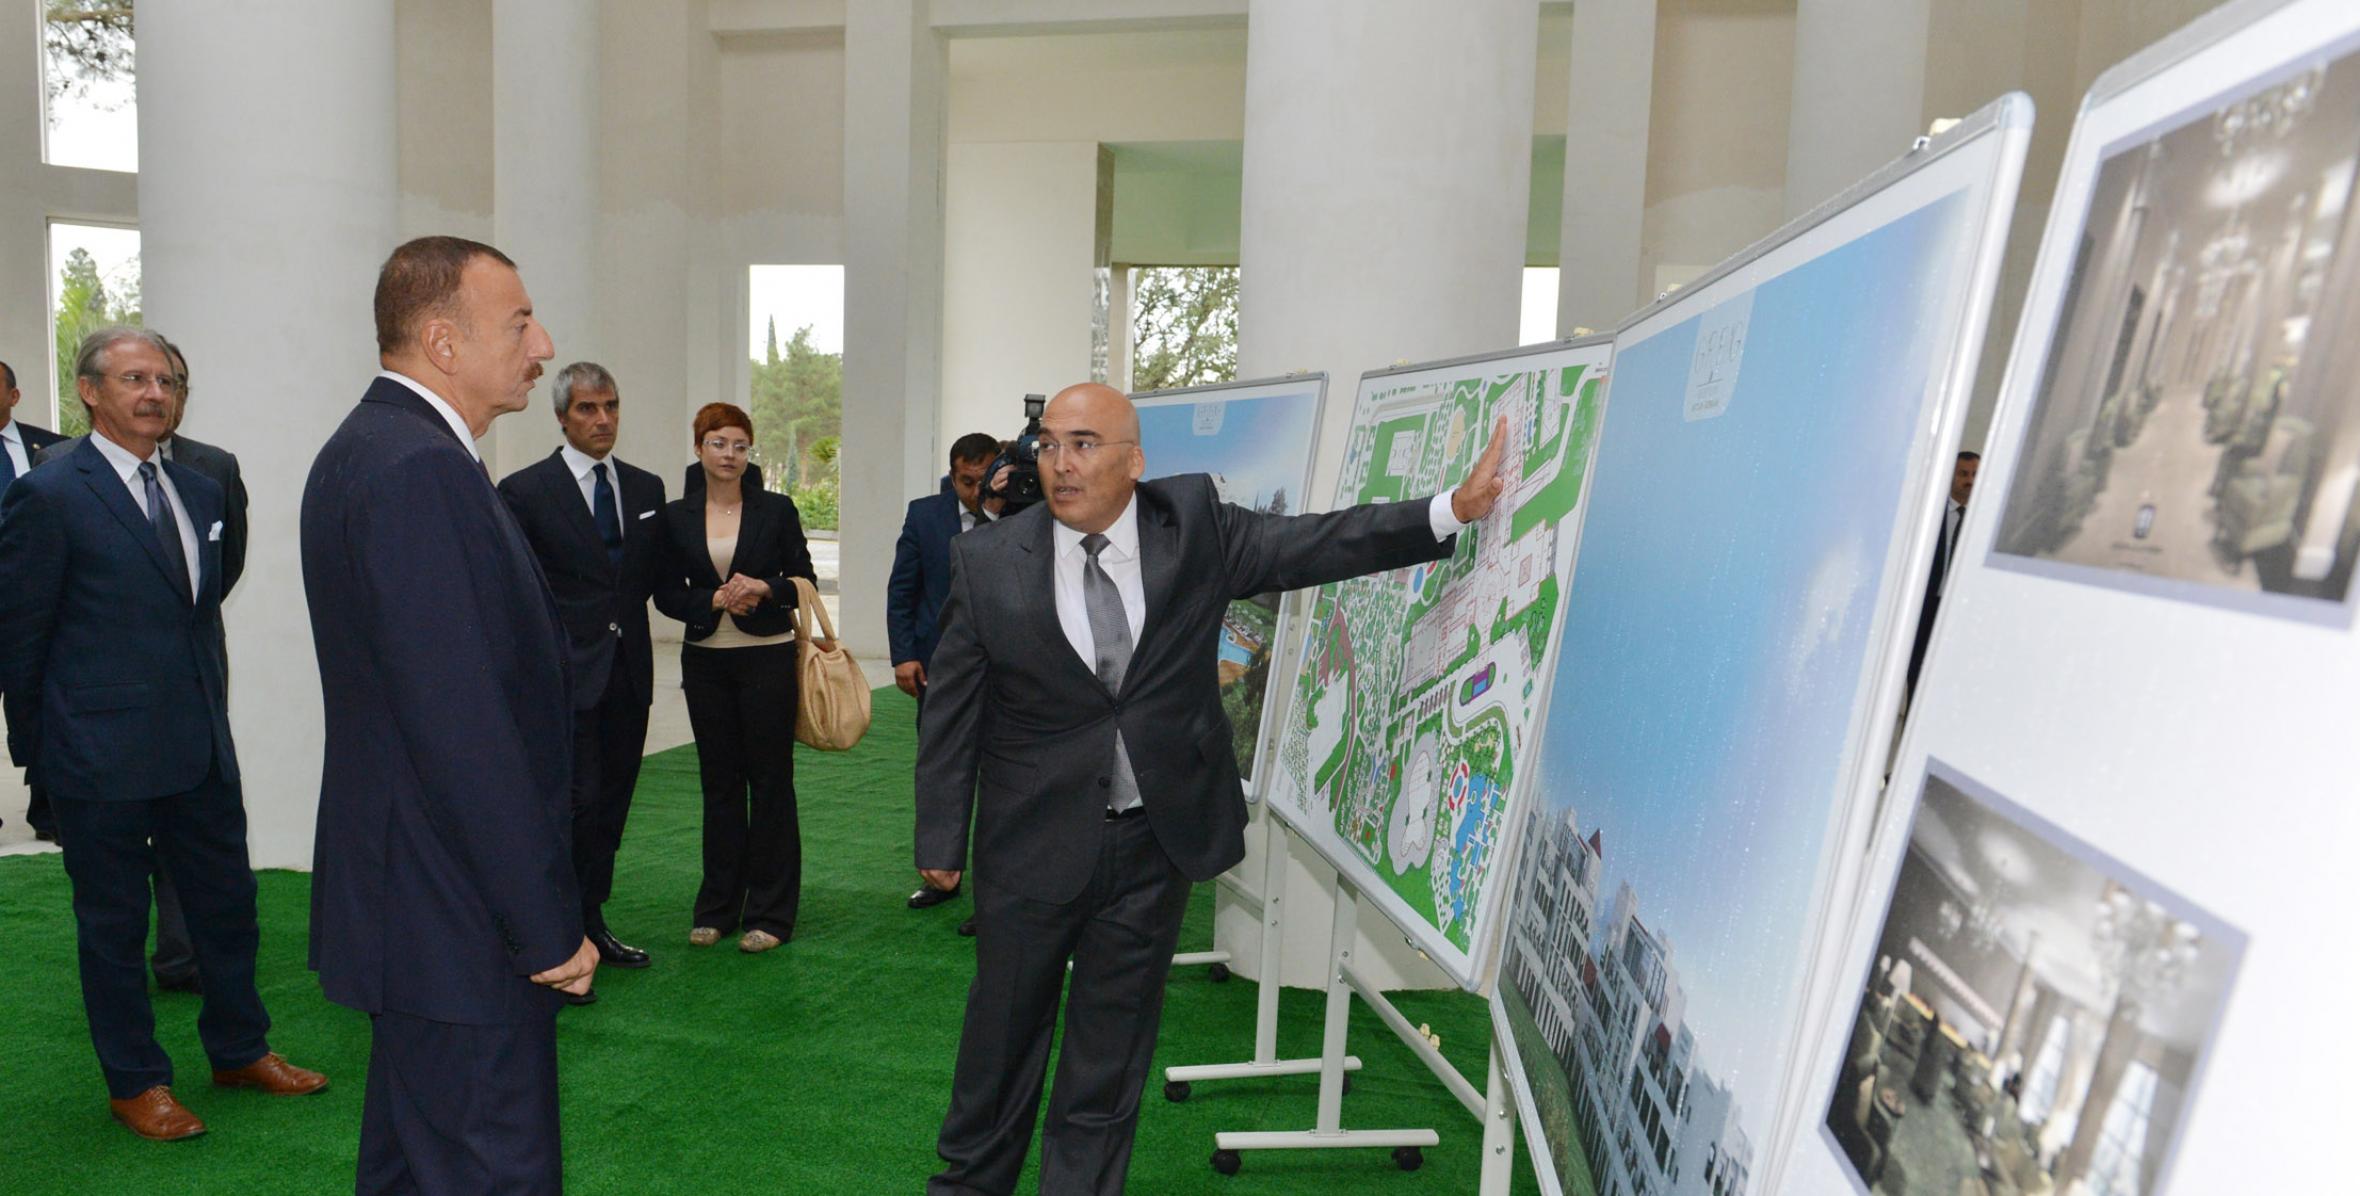 Ilham Aliyev reviewed the progress of construction of the "Karabakh" sanatorium in Naftalan